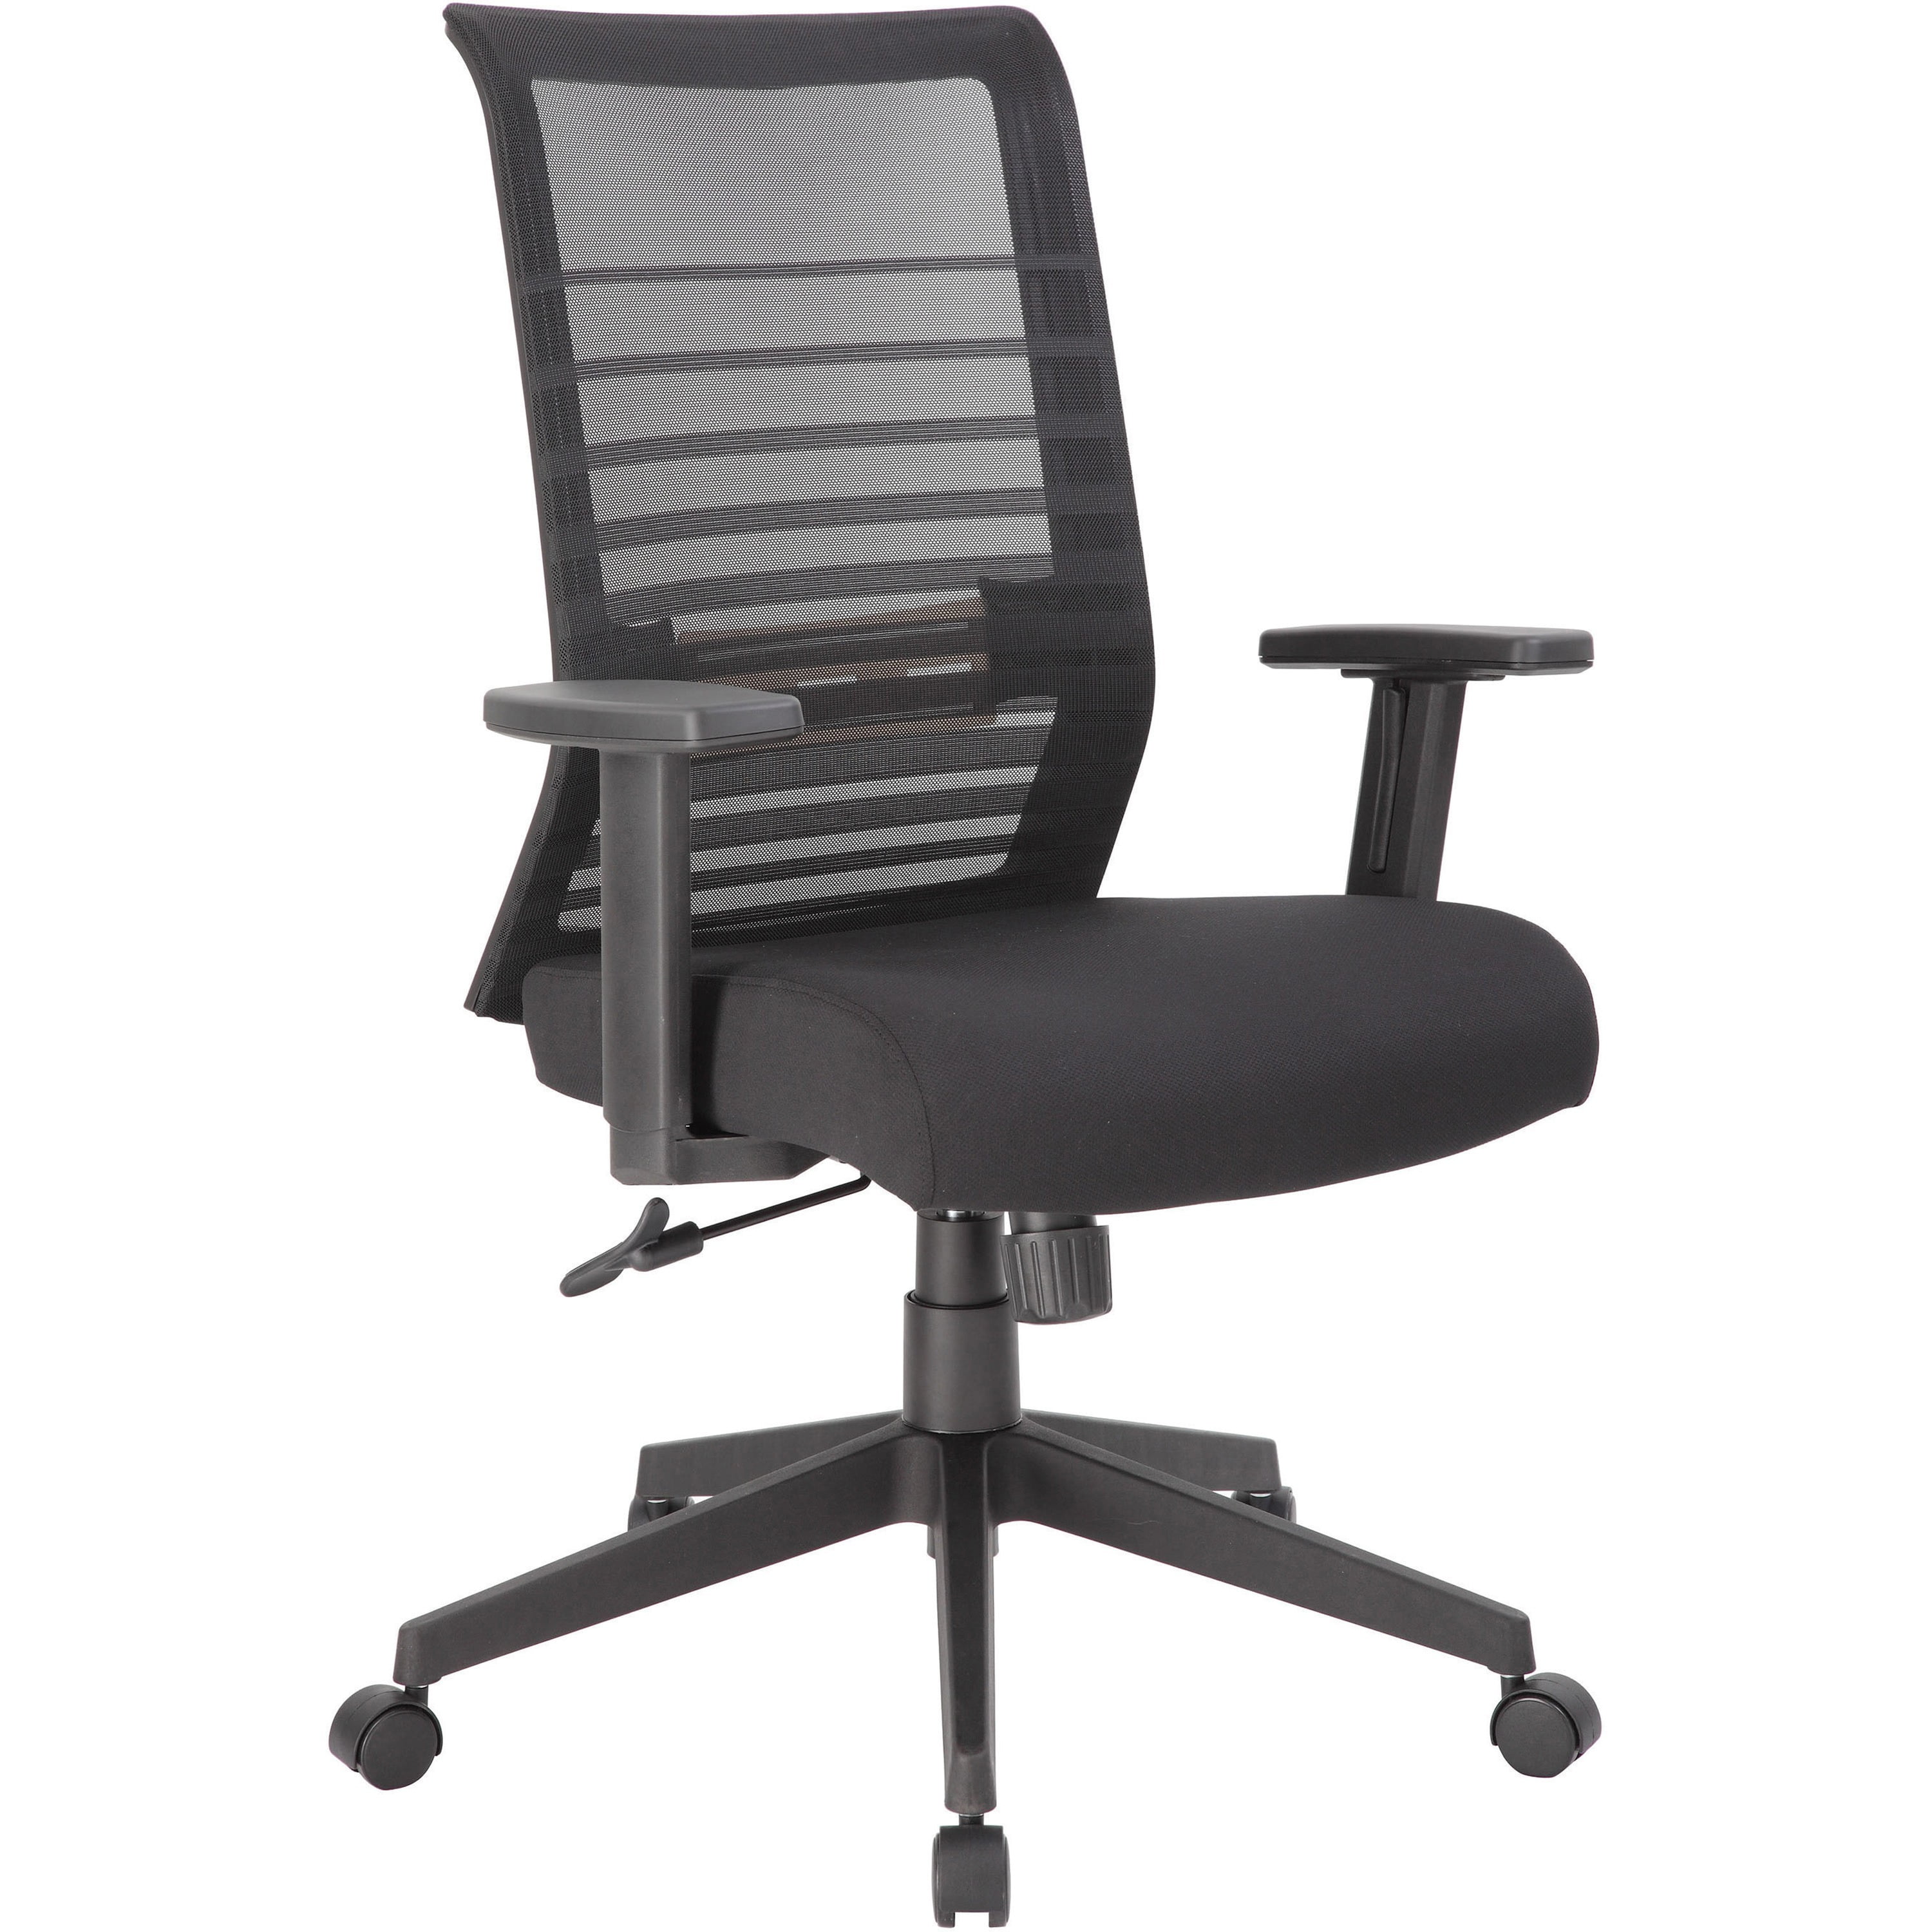 B6566-bk Mesh Task Chair, Black